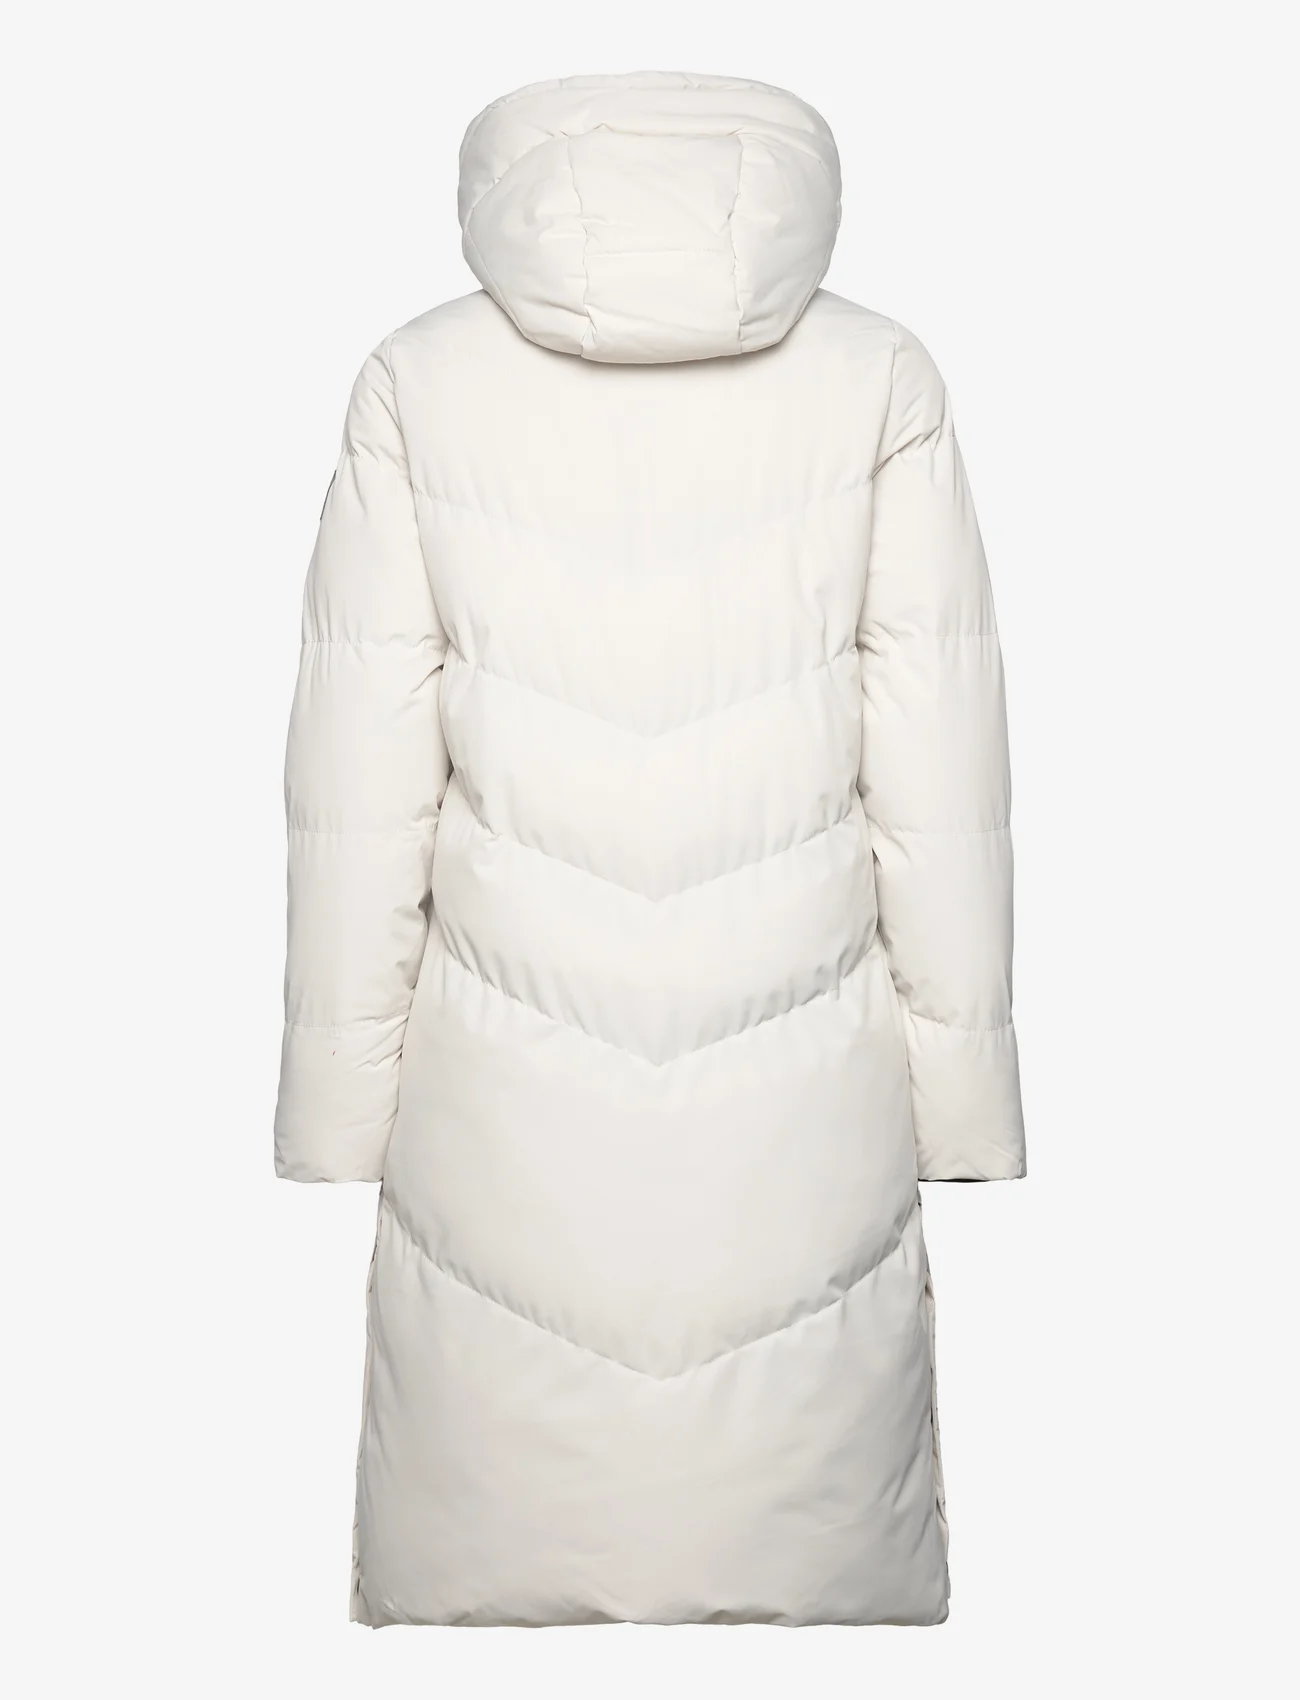 Garcia - ladies outdoor jackets - talvemantlid - cream - 1